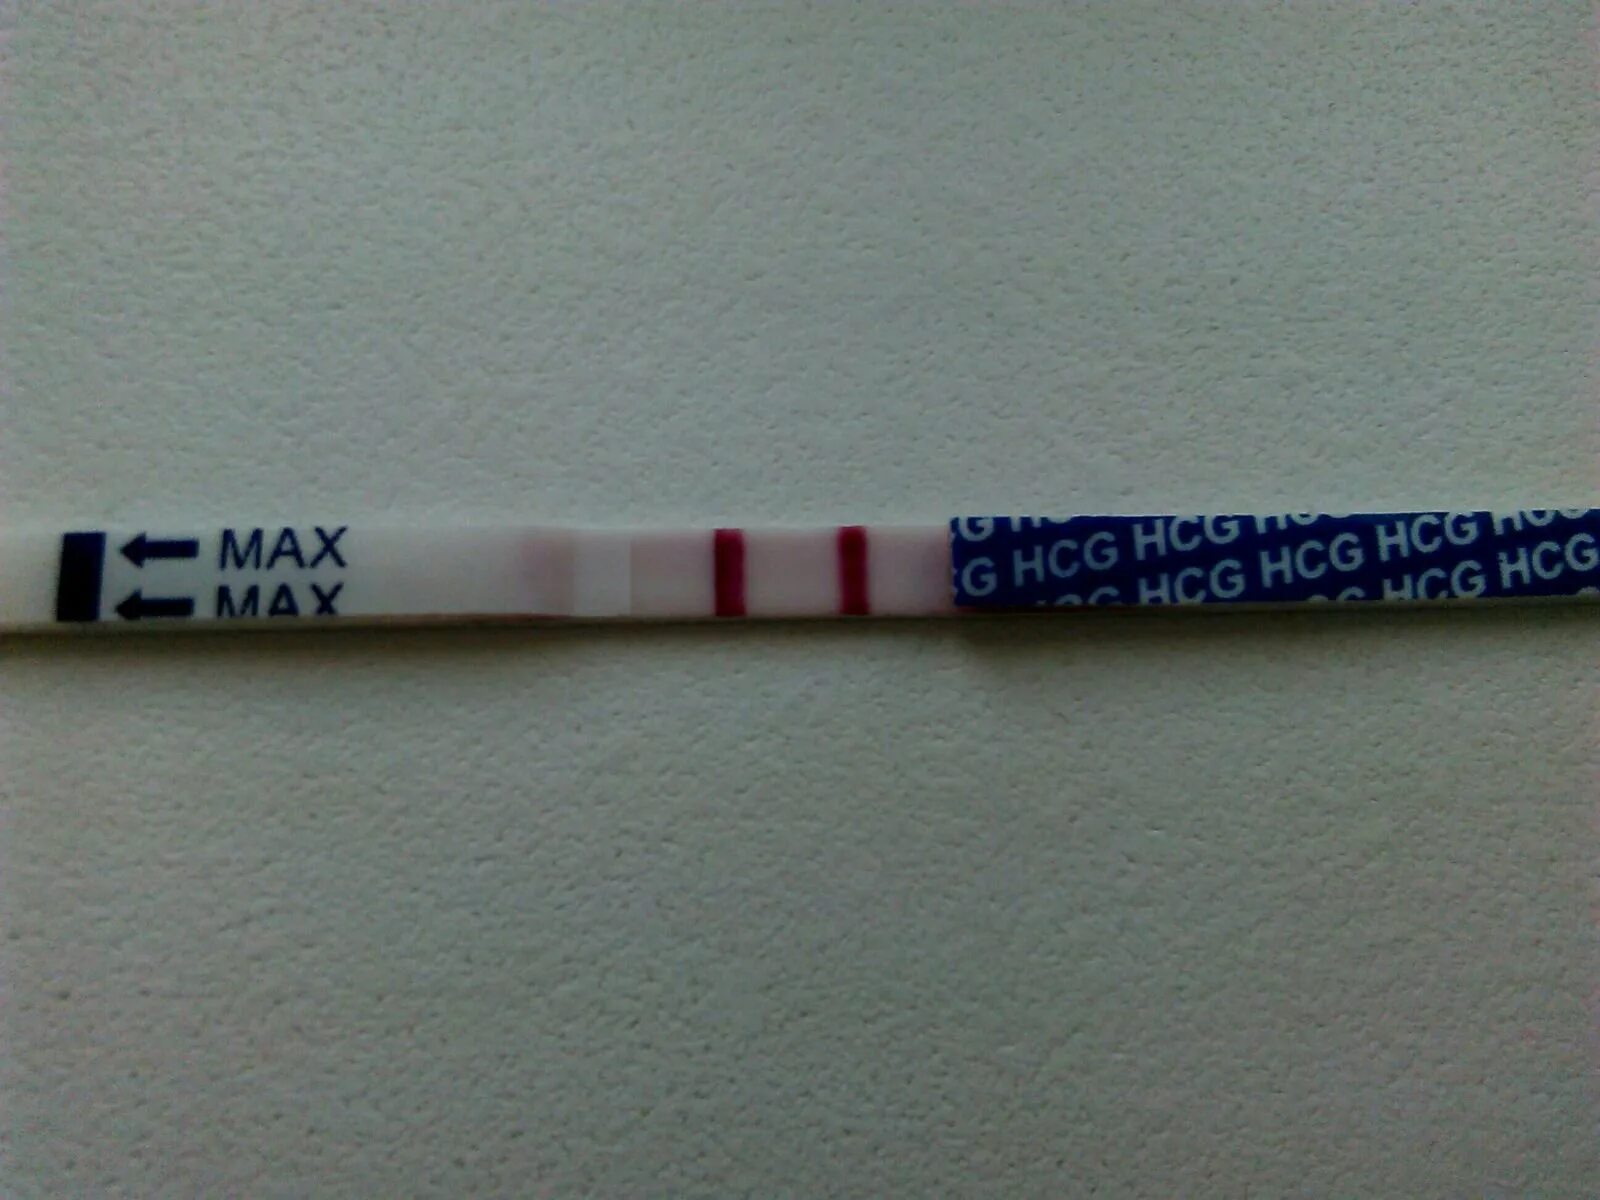 Frautest 2 полоски. Attest тест на беременность 2 gjkjcrb. Положительный тестна беременность. Положительный тест набееменность.